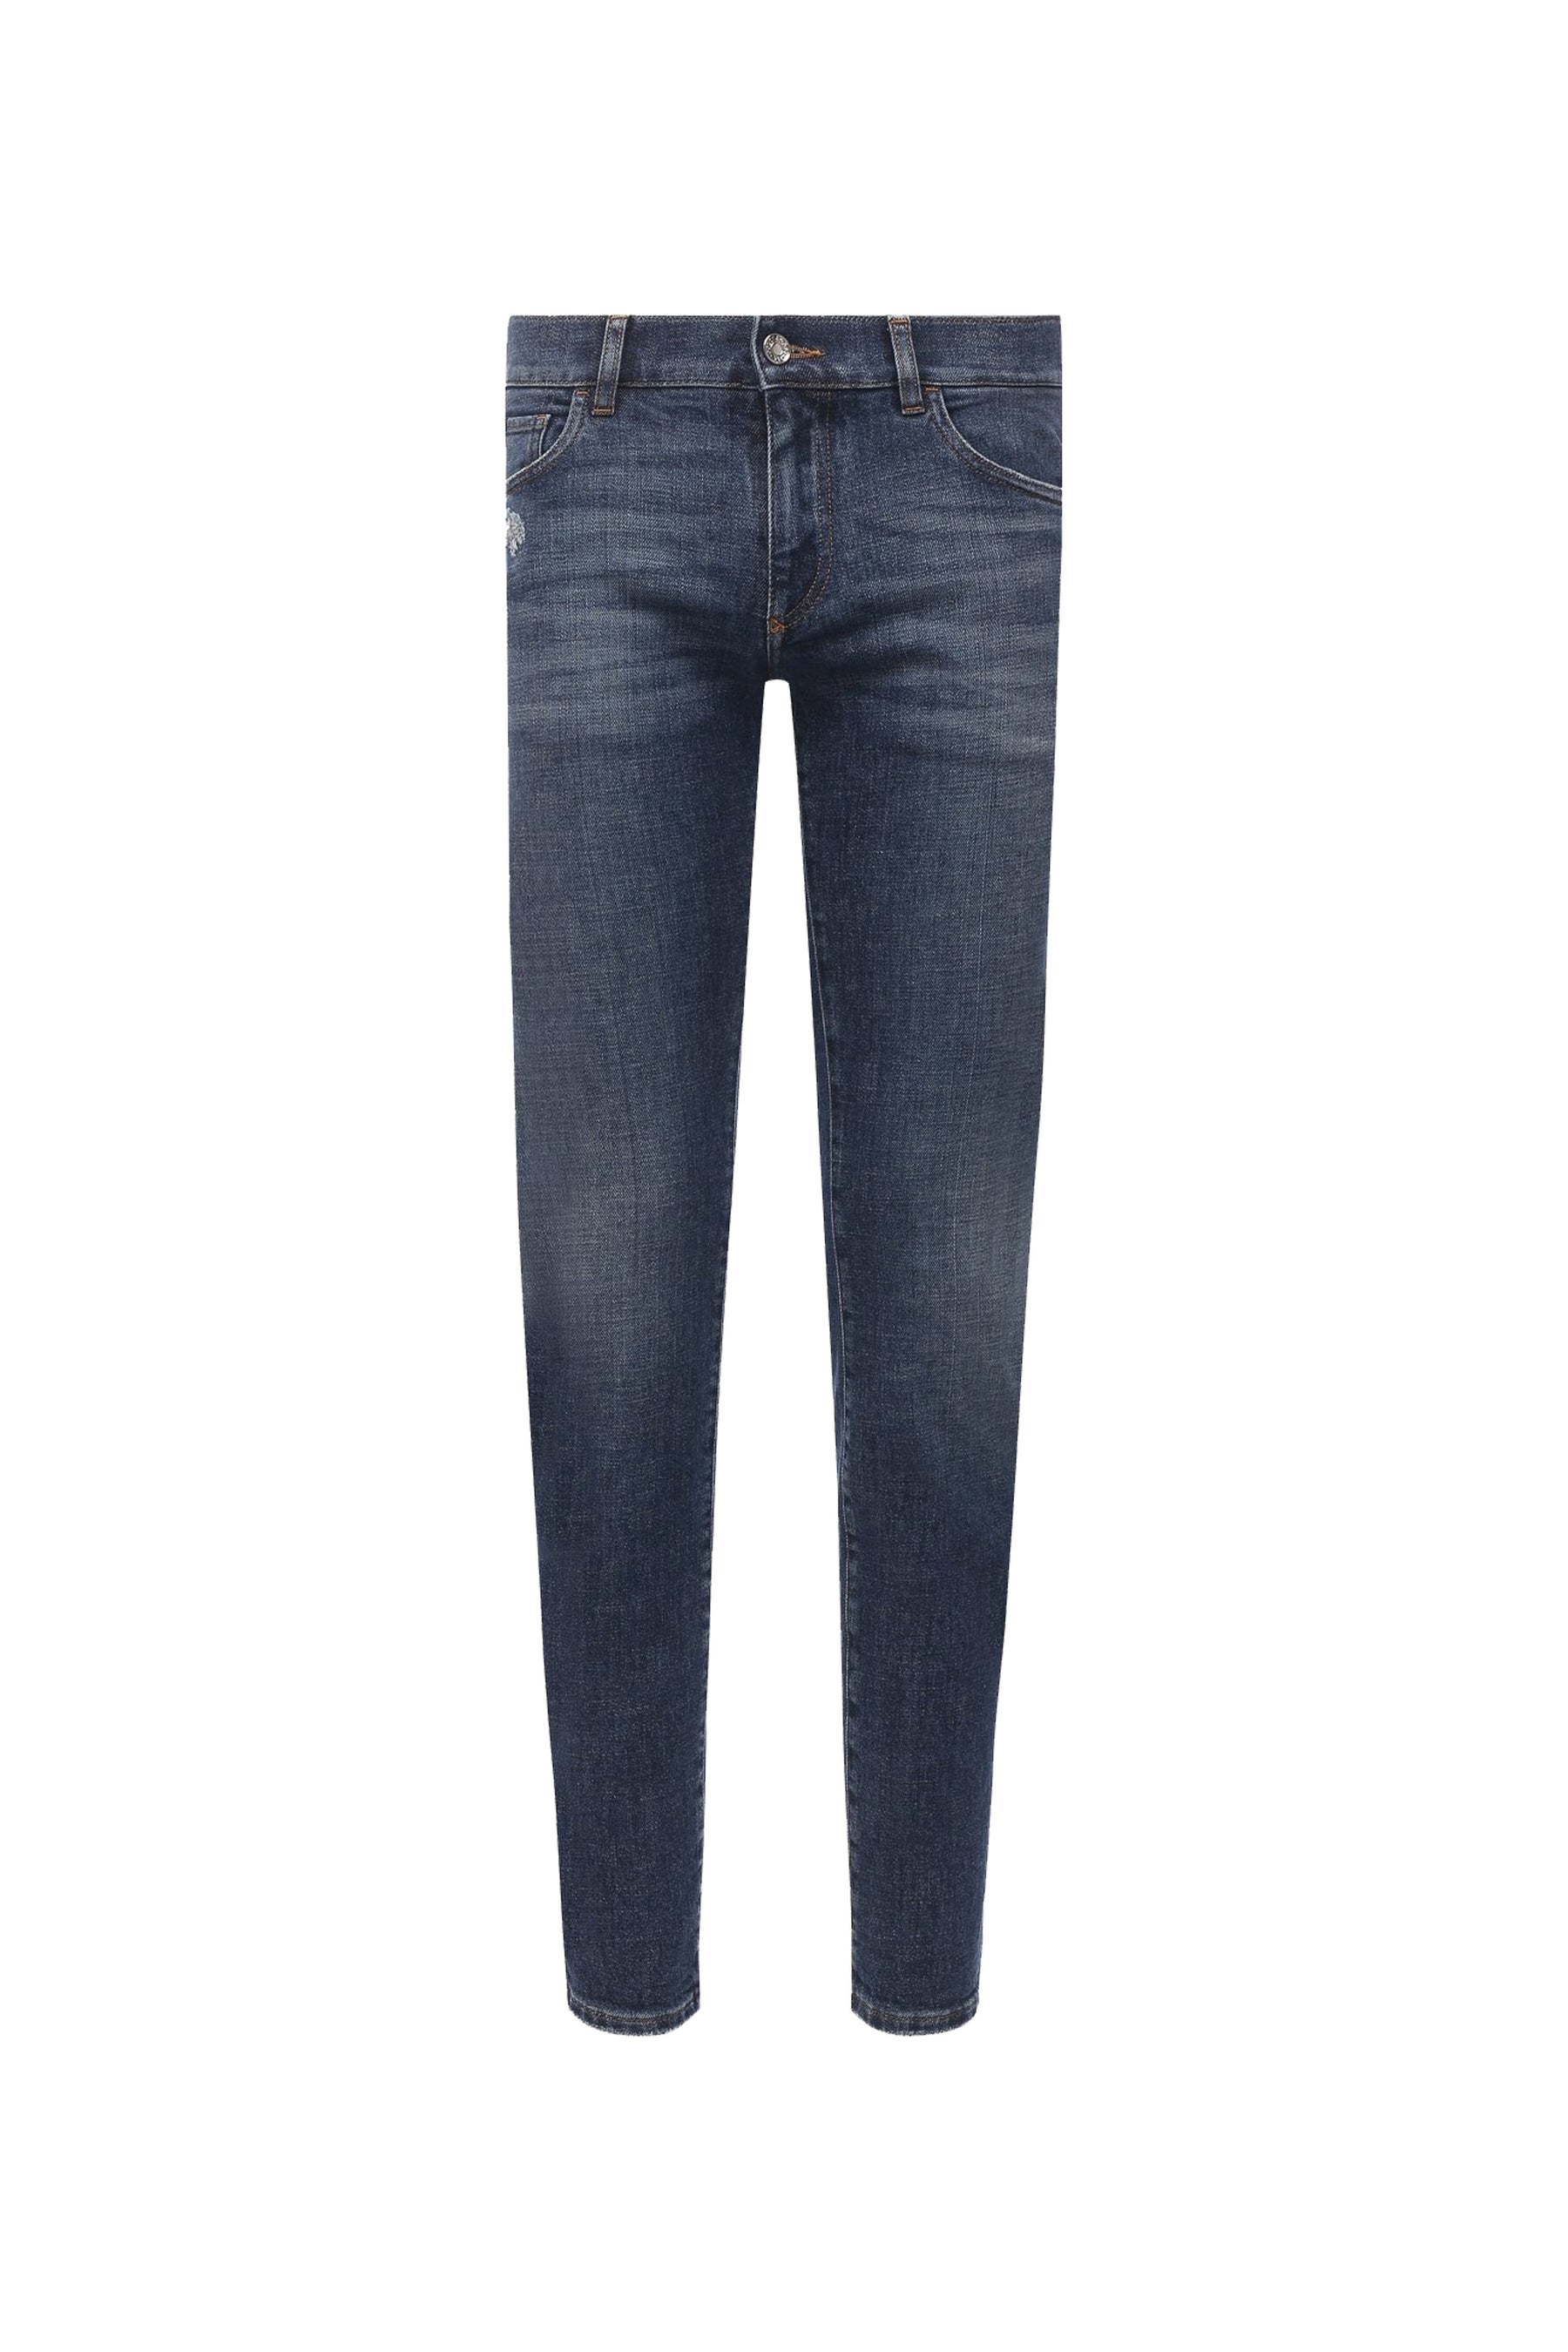 Dolce & Gabbana Dark Blue Jeans Skinny